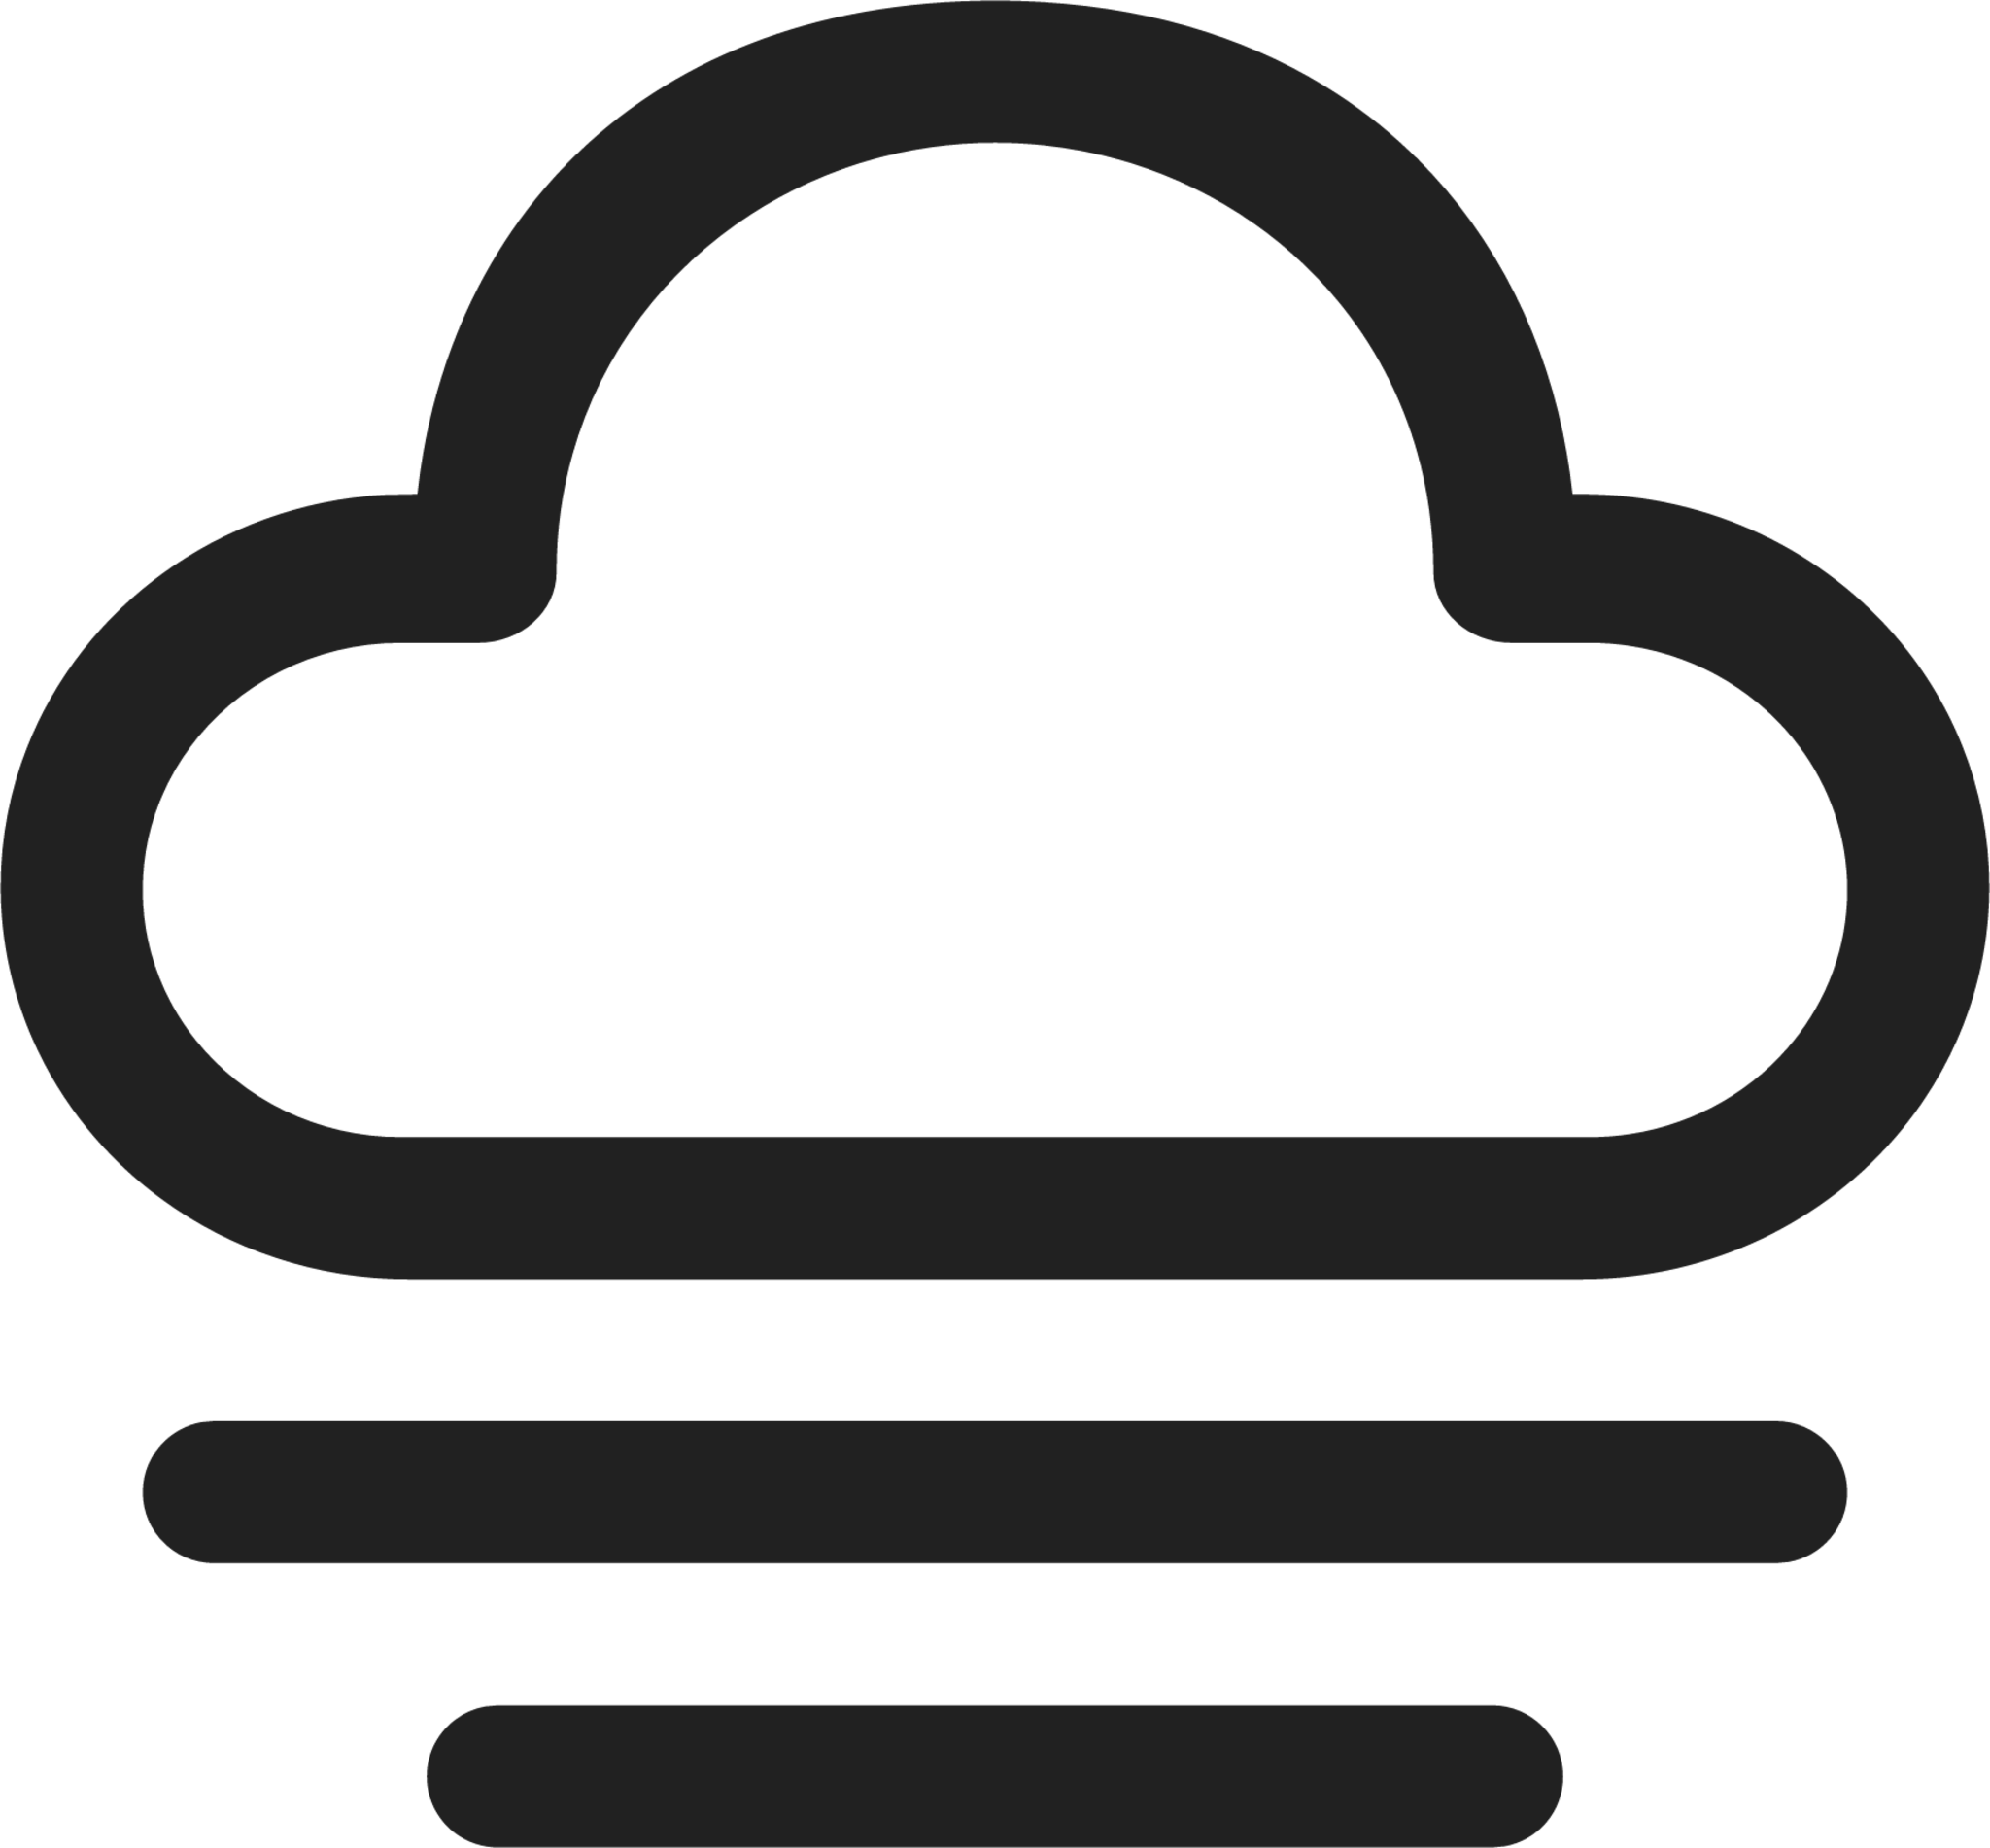 Weather Fog icon